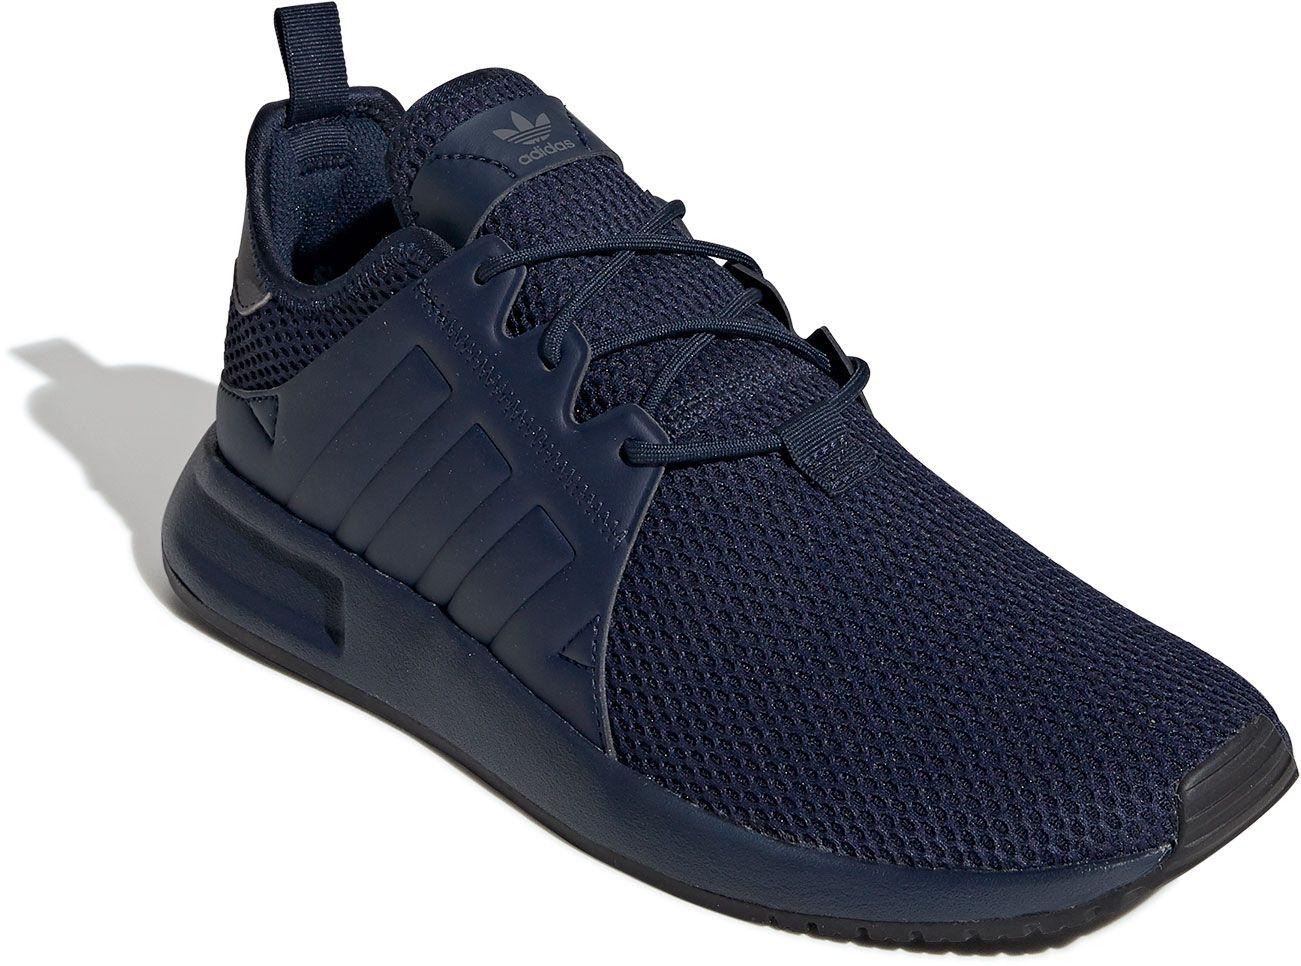 adidas Originals X_plr Shoes in Navy/Navy (Blue) for Men - Lyst